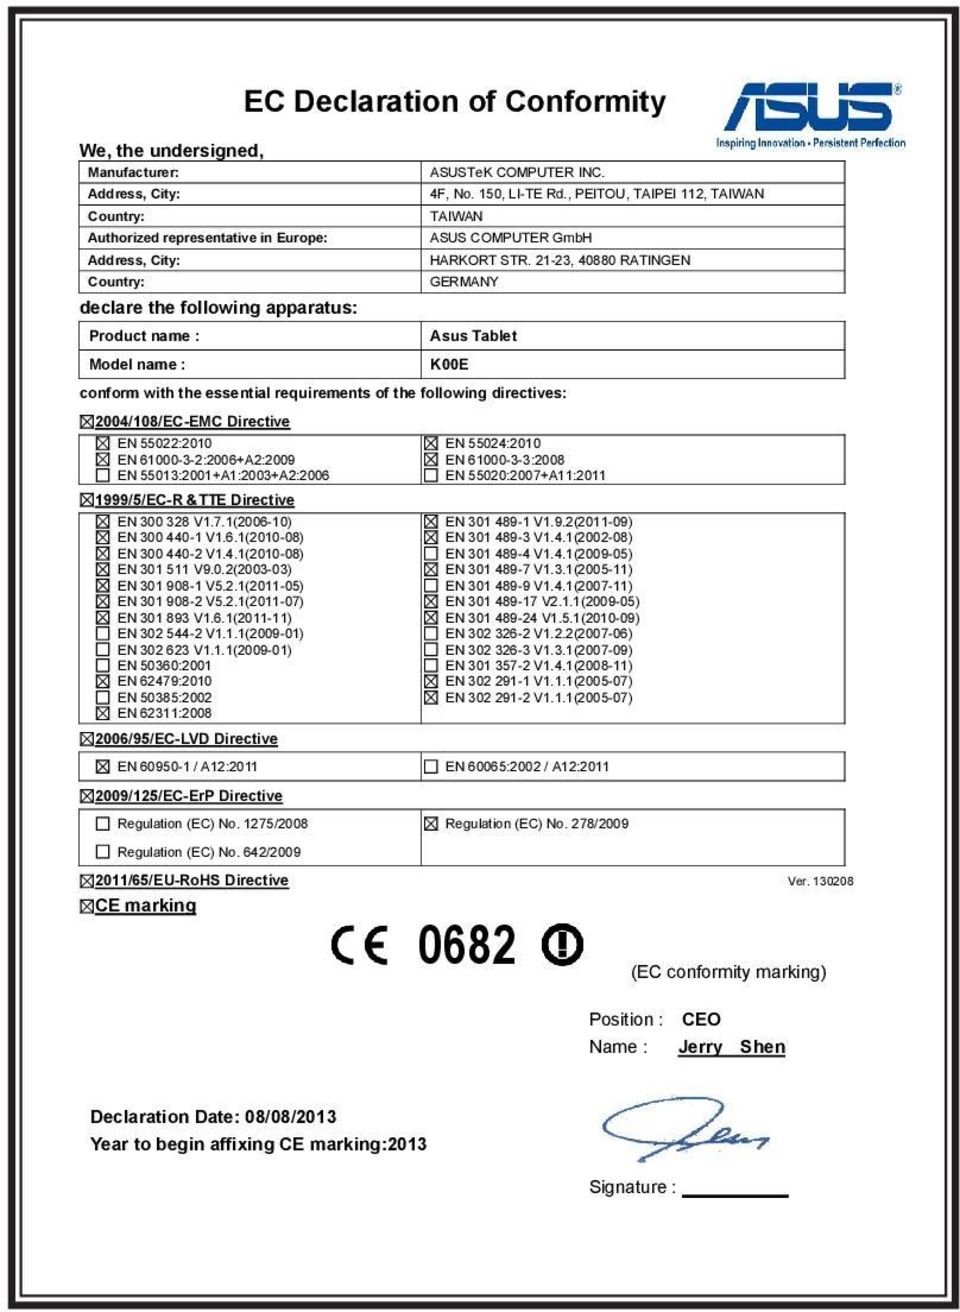 21-23, 40880 RATINGEN GERMANY Asus Tablet K00E conform with the essential requirements of the following directives: 2004/108/EC-EMC Directive EN 55022:2010 EN 61000-3-2:2006+A2:2009 EN